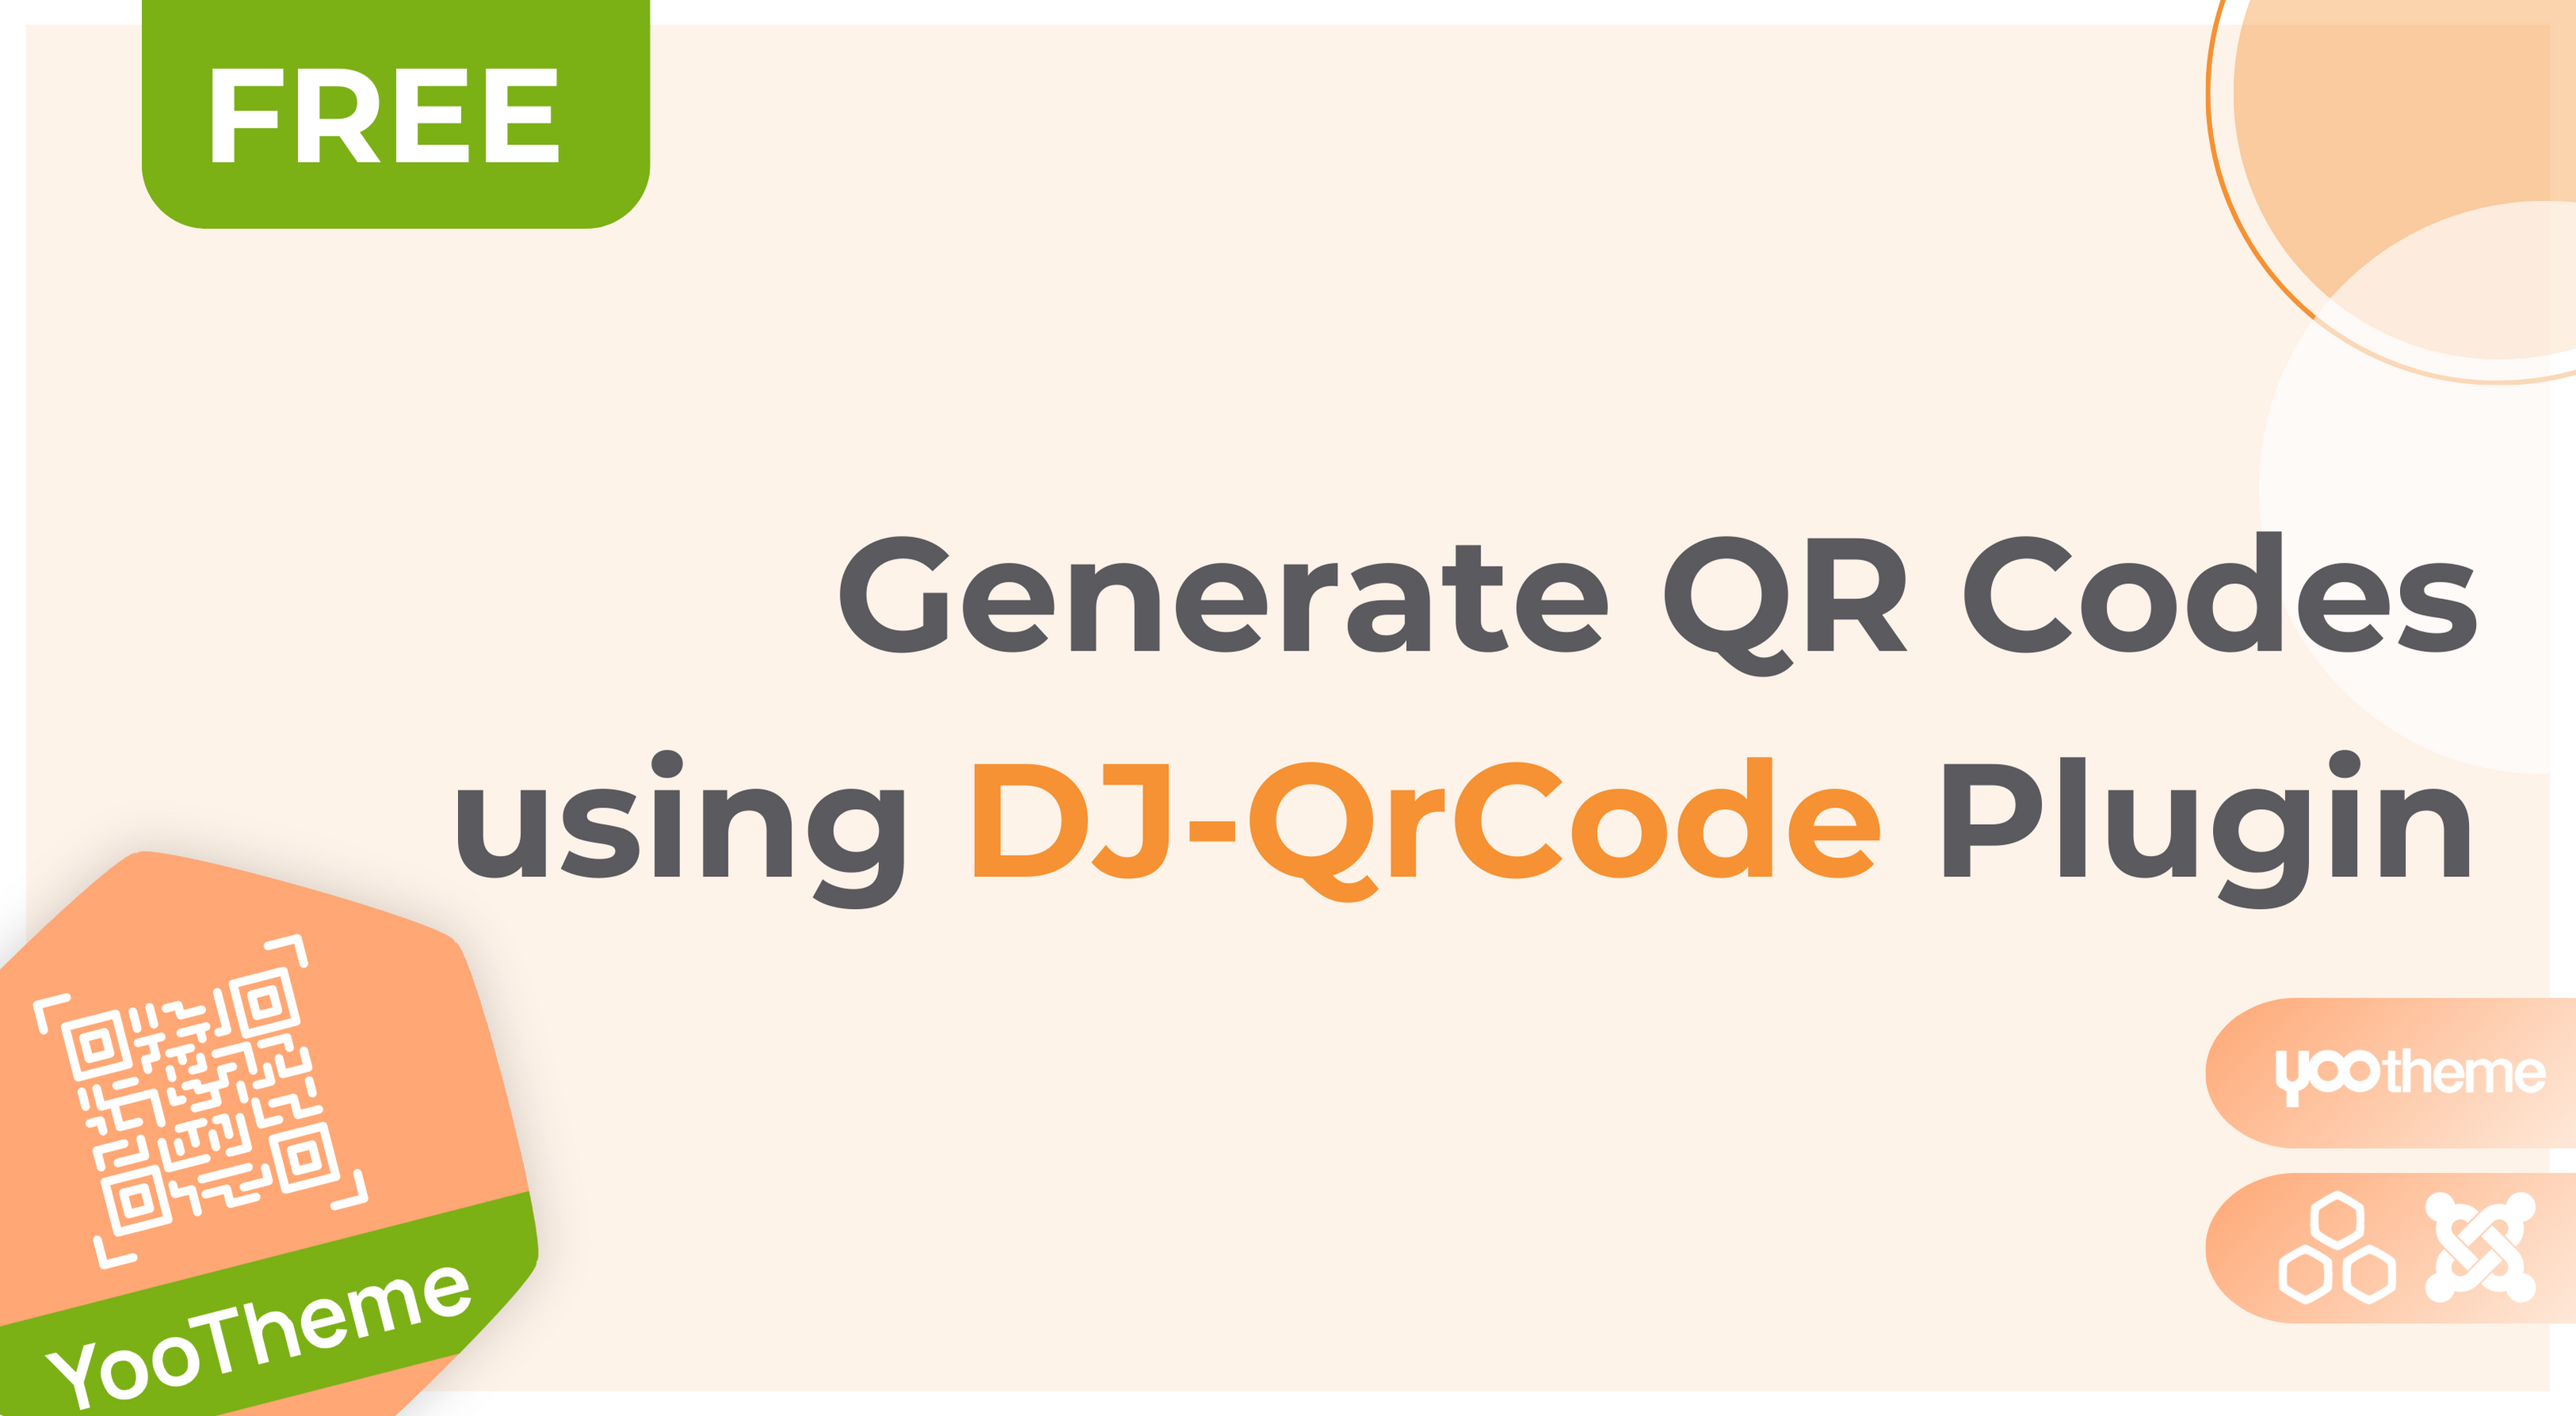 dj-qrcode free plugin